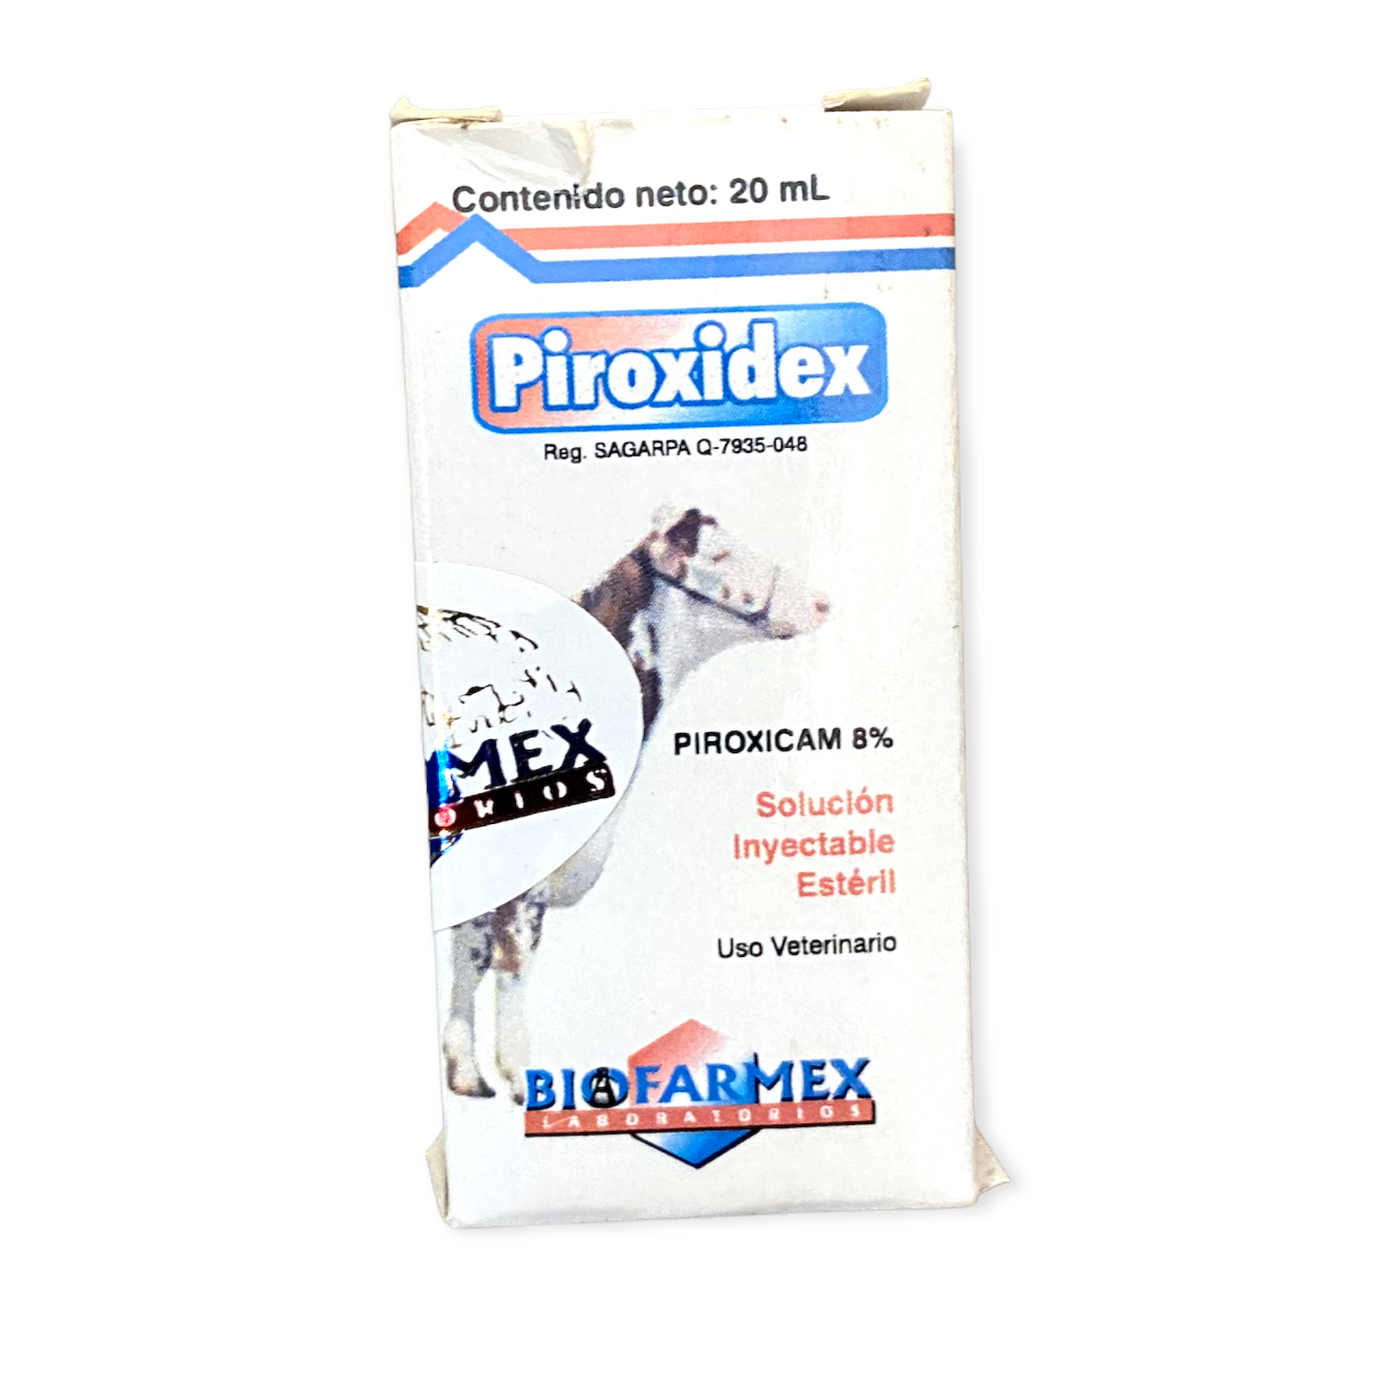 Piroxidex 20 Ml